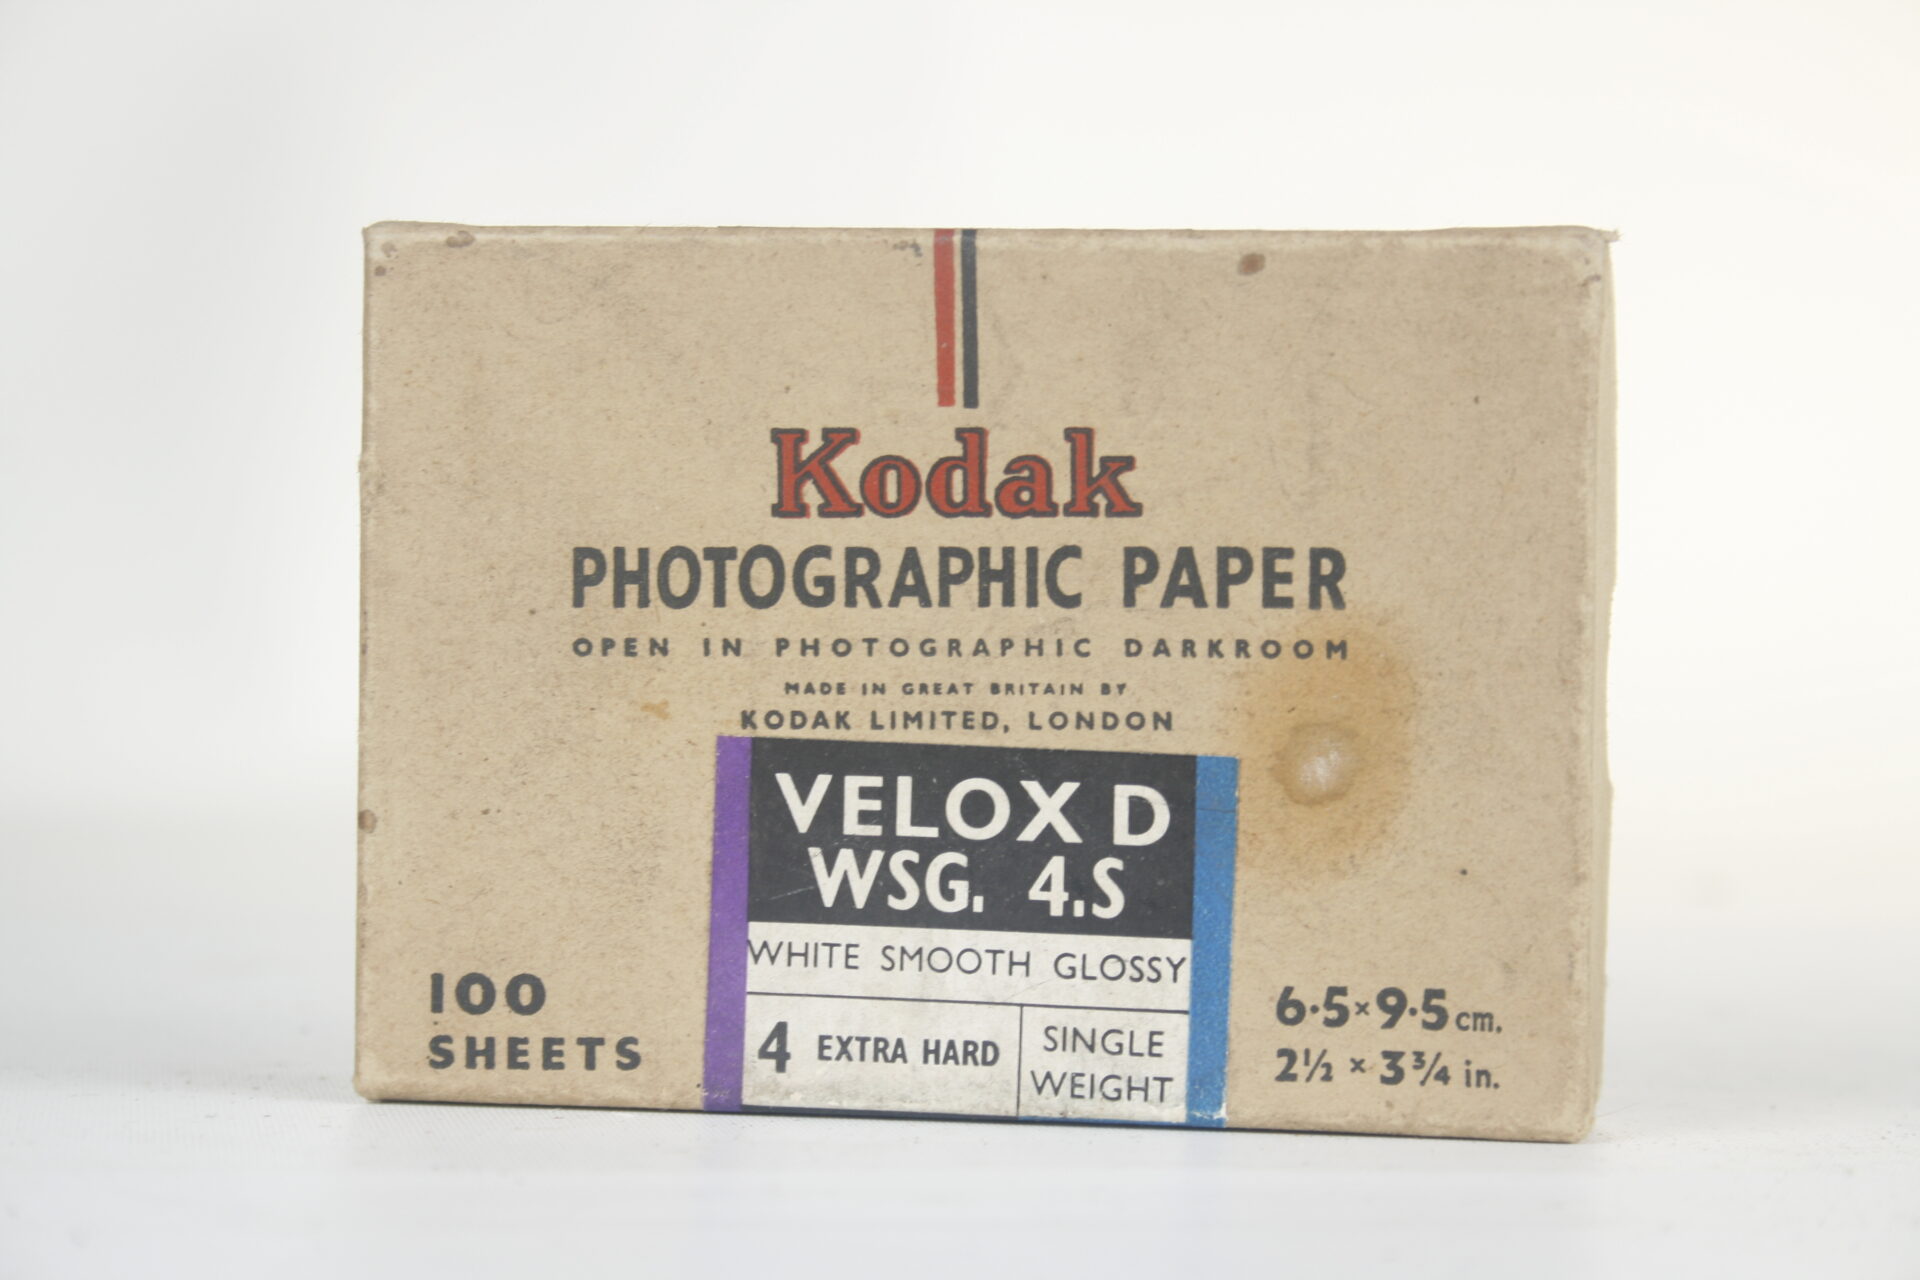 Kodak fotopapier. 6.5-9.6 cm. Velox D WSG. 4.S. 4 extra hard. Glossy